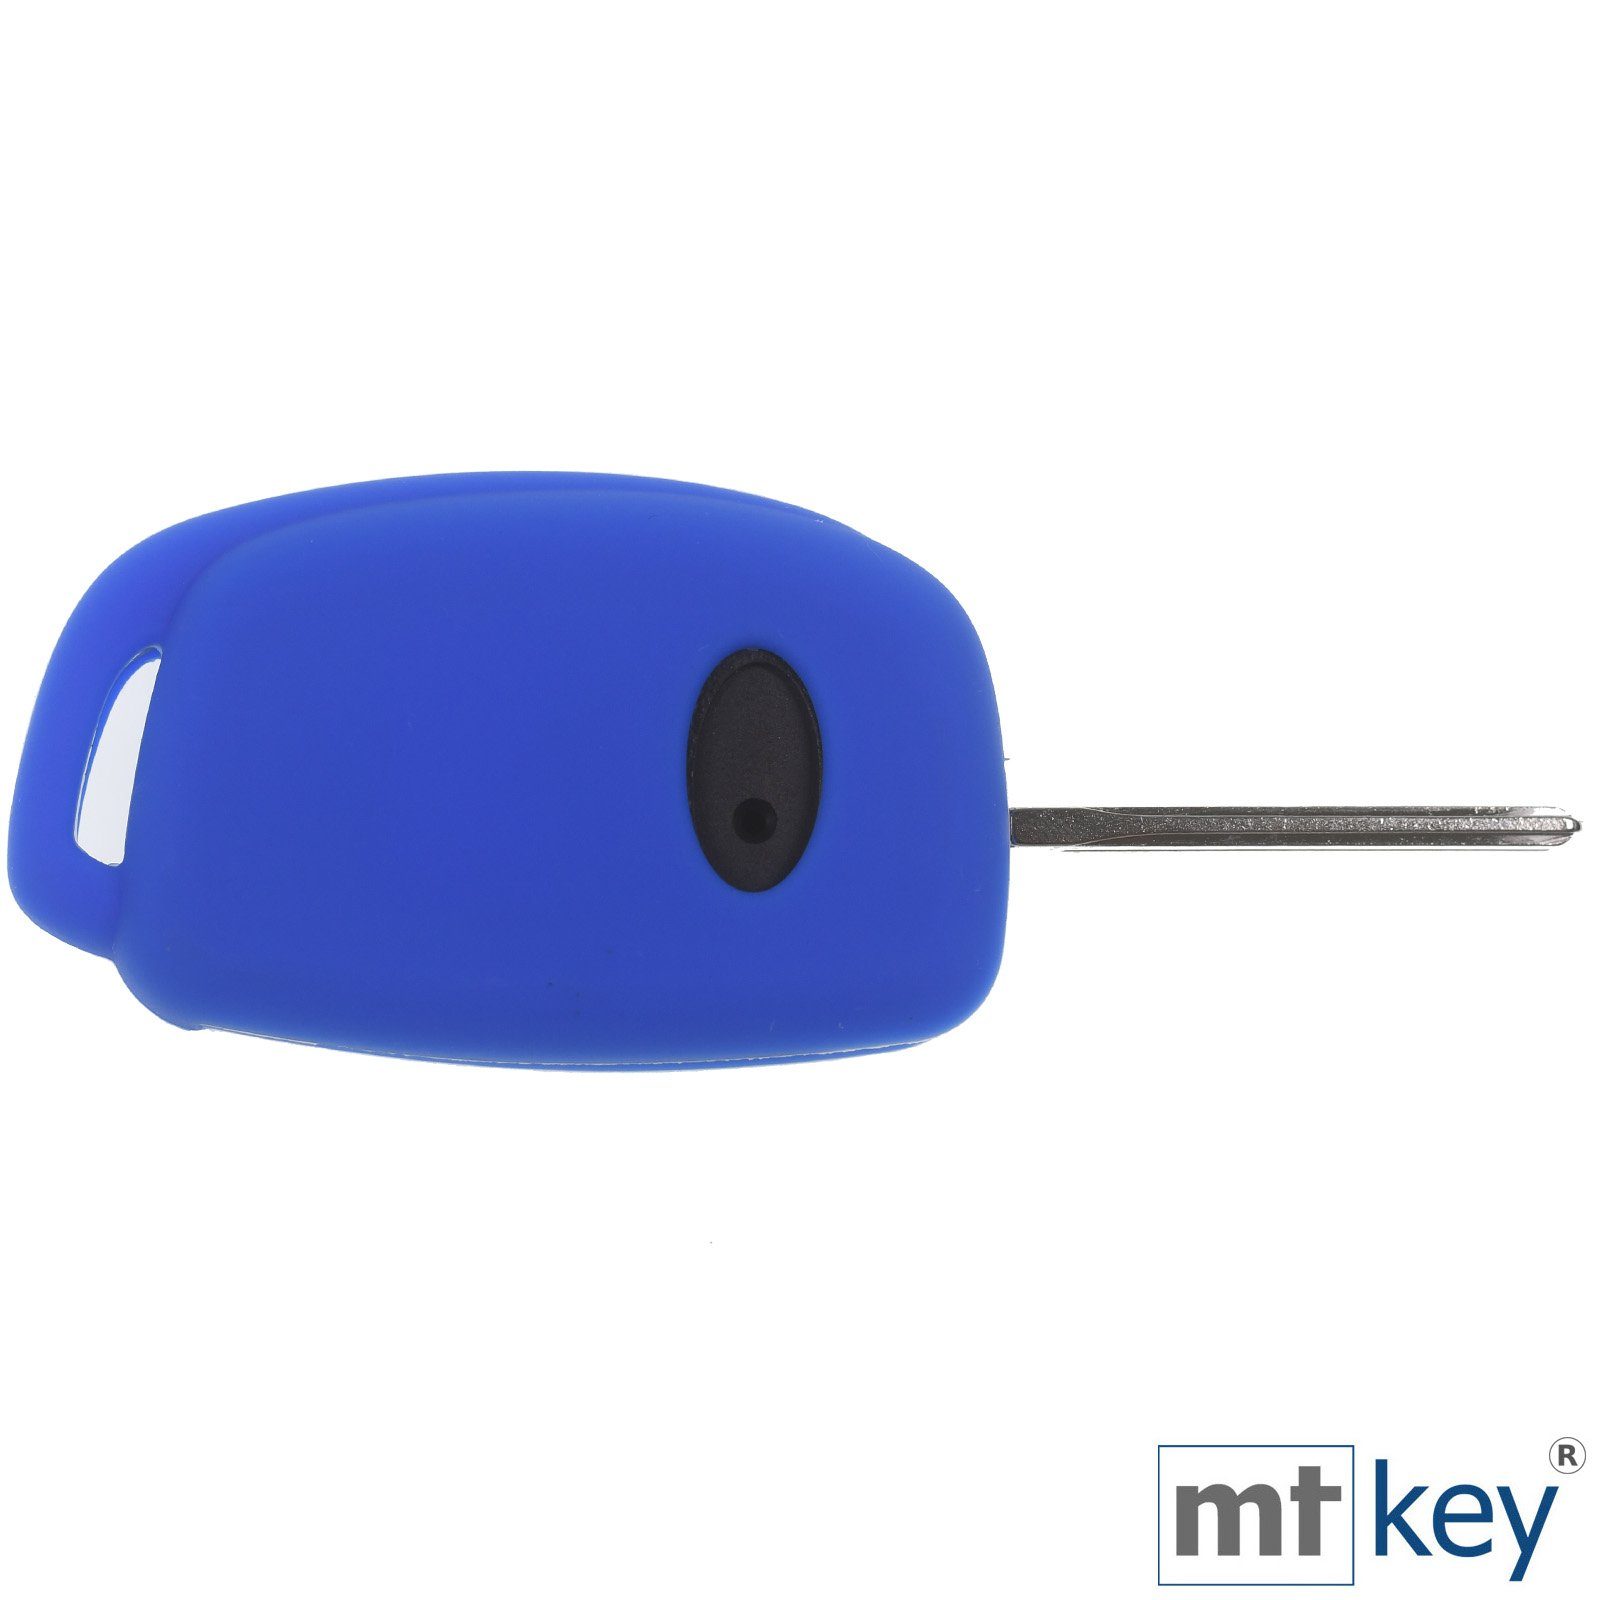 Klappschlüssel Tucson Schlüsseltasche Autoschlüssel im Design i10 i20 Accent Schutzhülle i40 Hyundai ix25 Silikon Knopf + für Wabe ix35 Blau 3 mt-key Schlüsselband,